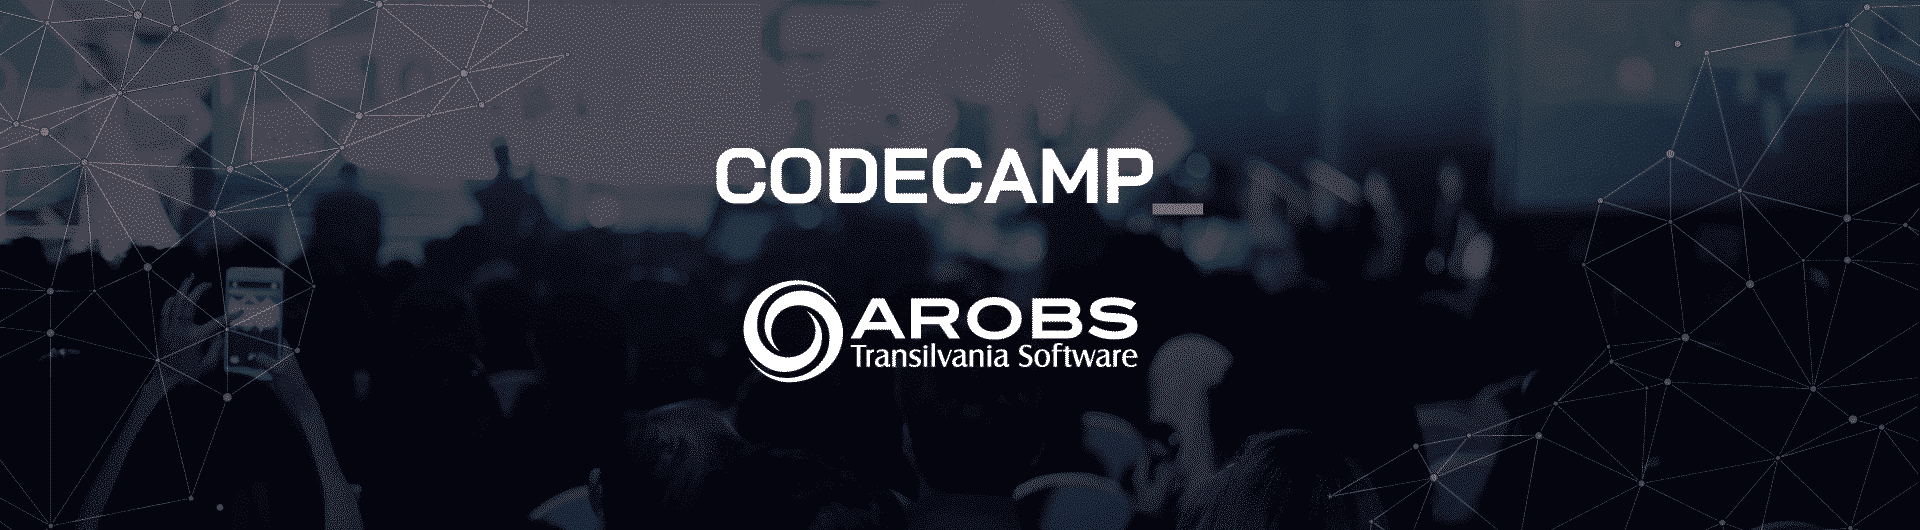 Codecamp